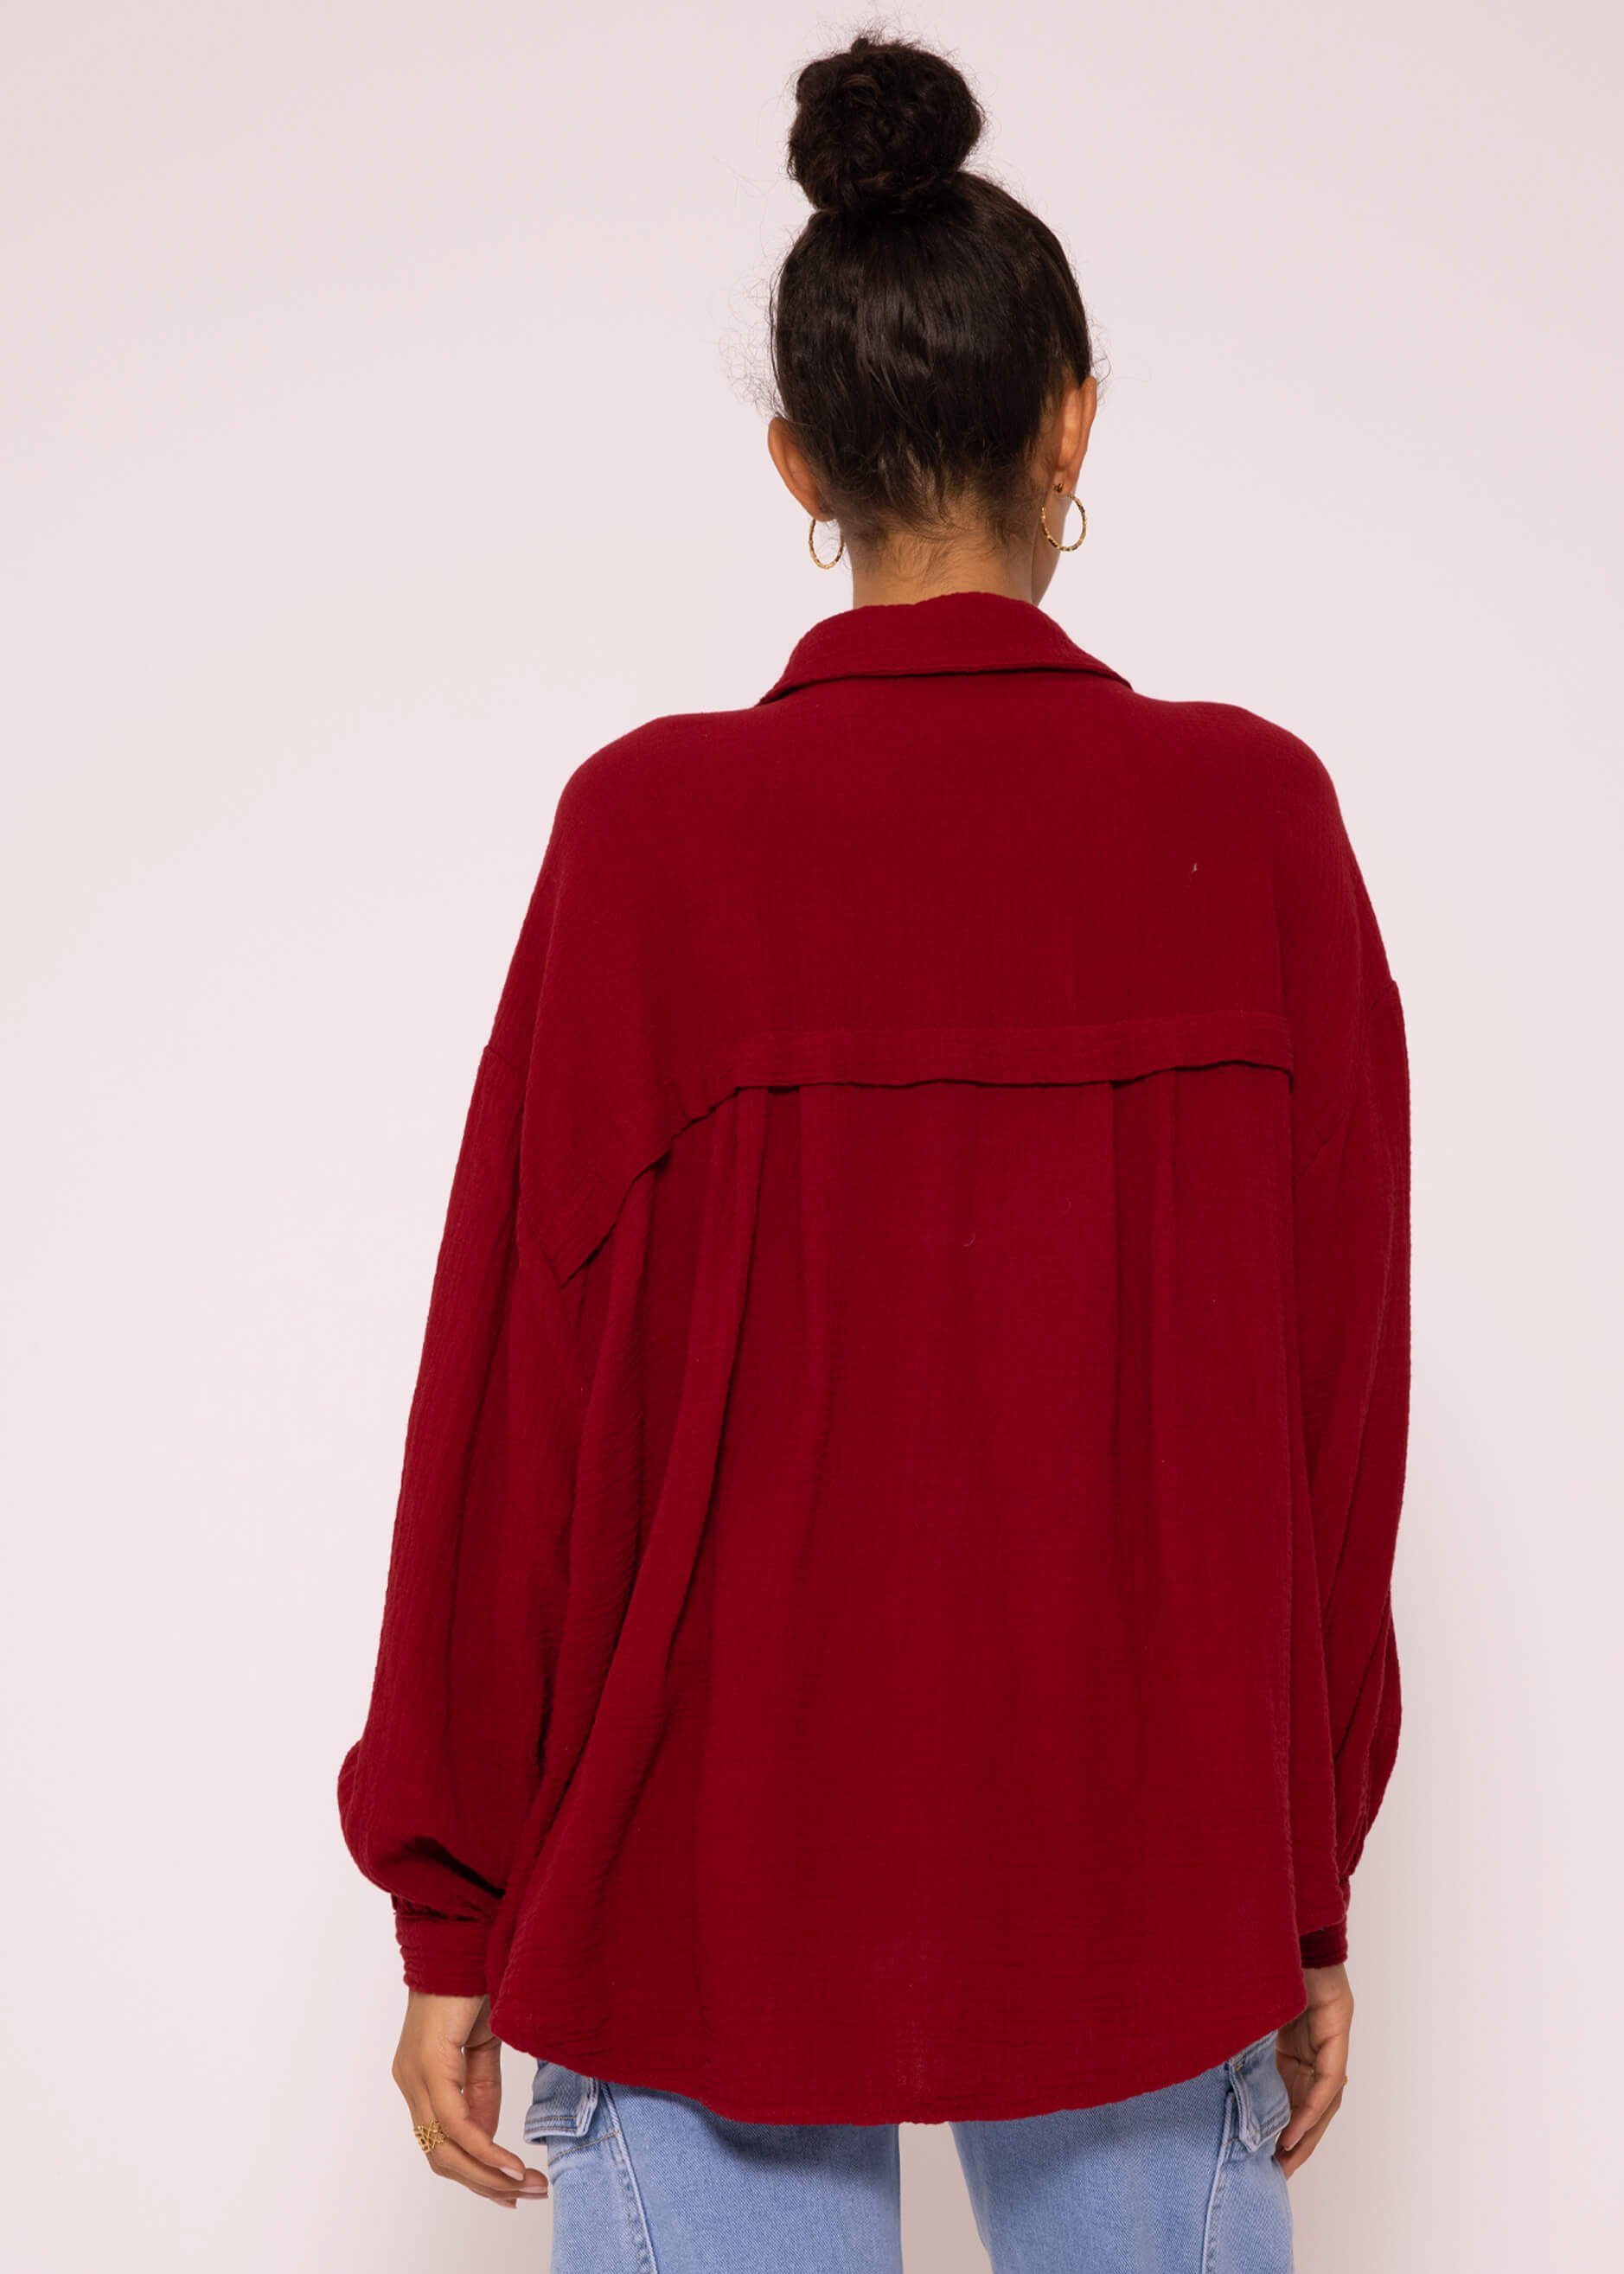 SASSYCLASSY Longbluse Oversize V-Ausschnitt, Langarm Baumwolle One Musselin Size Damen Hemdbluse (Gr. aus Bluse lang mit 36-48) Dunkelrot